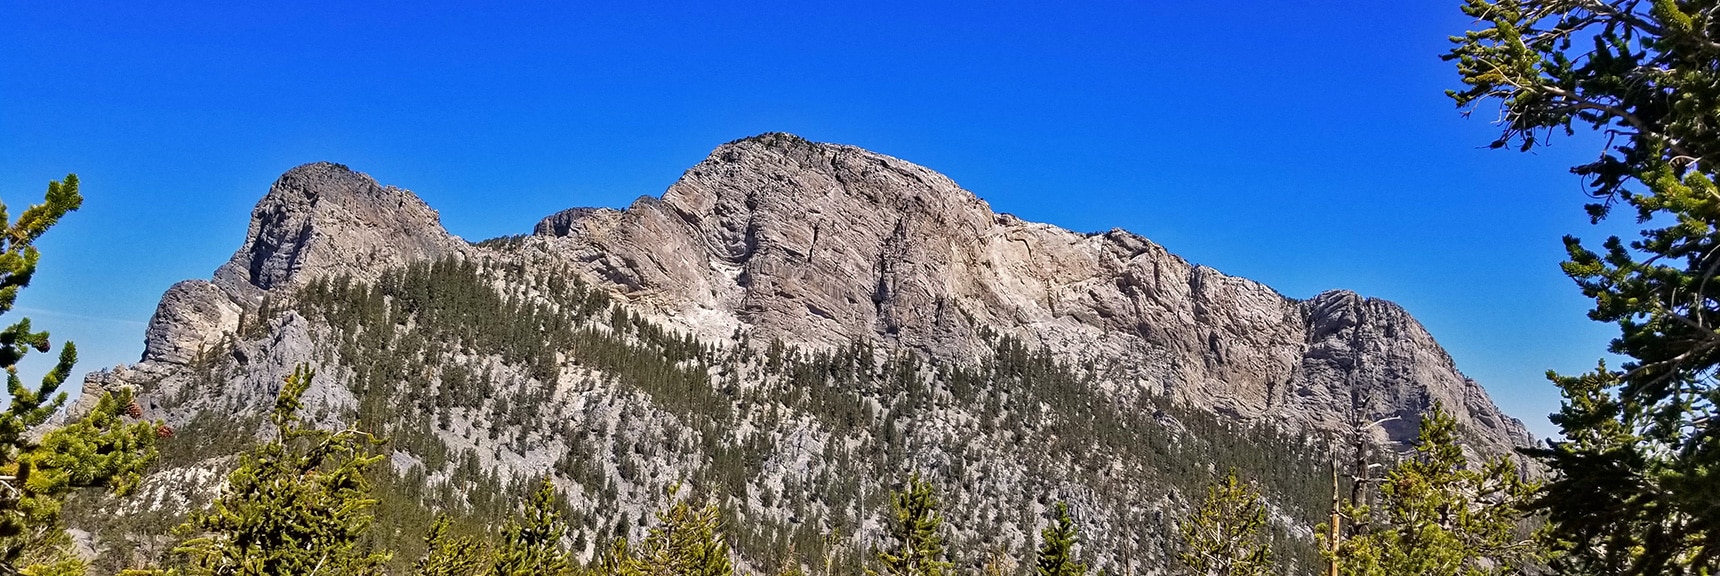 Full Shot of McFarland Peak Viewed from Bonanza Trail | Base of McFarland Peak via Bristlecone Pine Trail and Bonanza Trail | Lee Canyon | Spring Mountains, Nevada